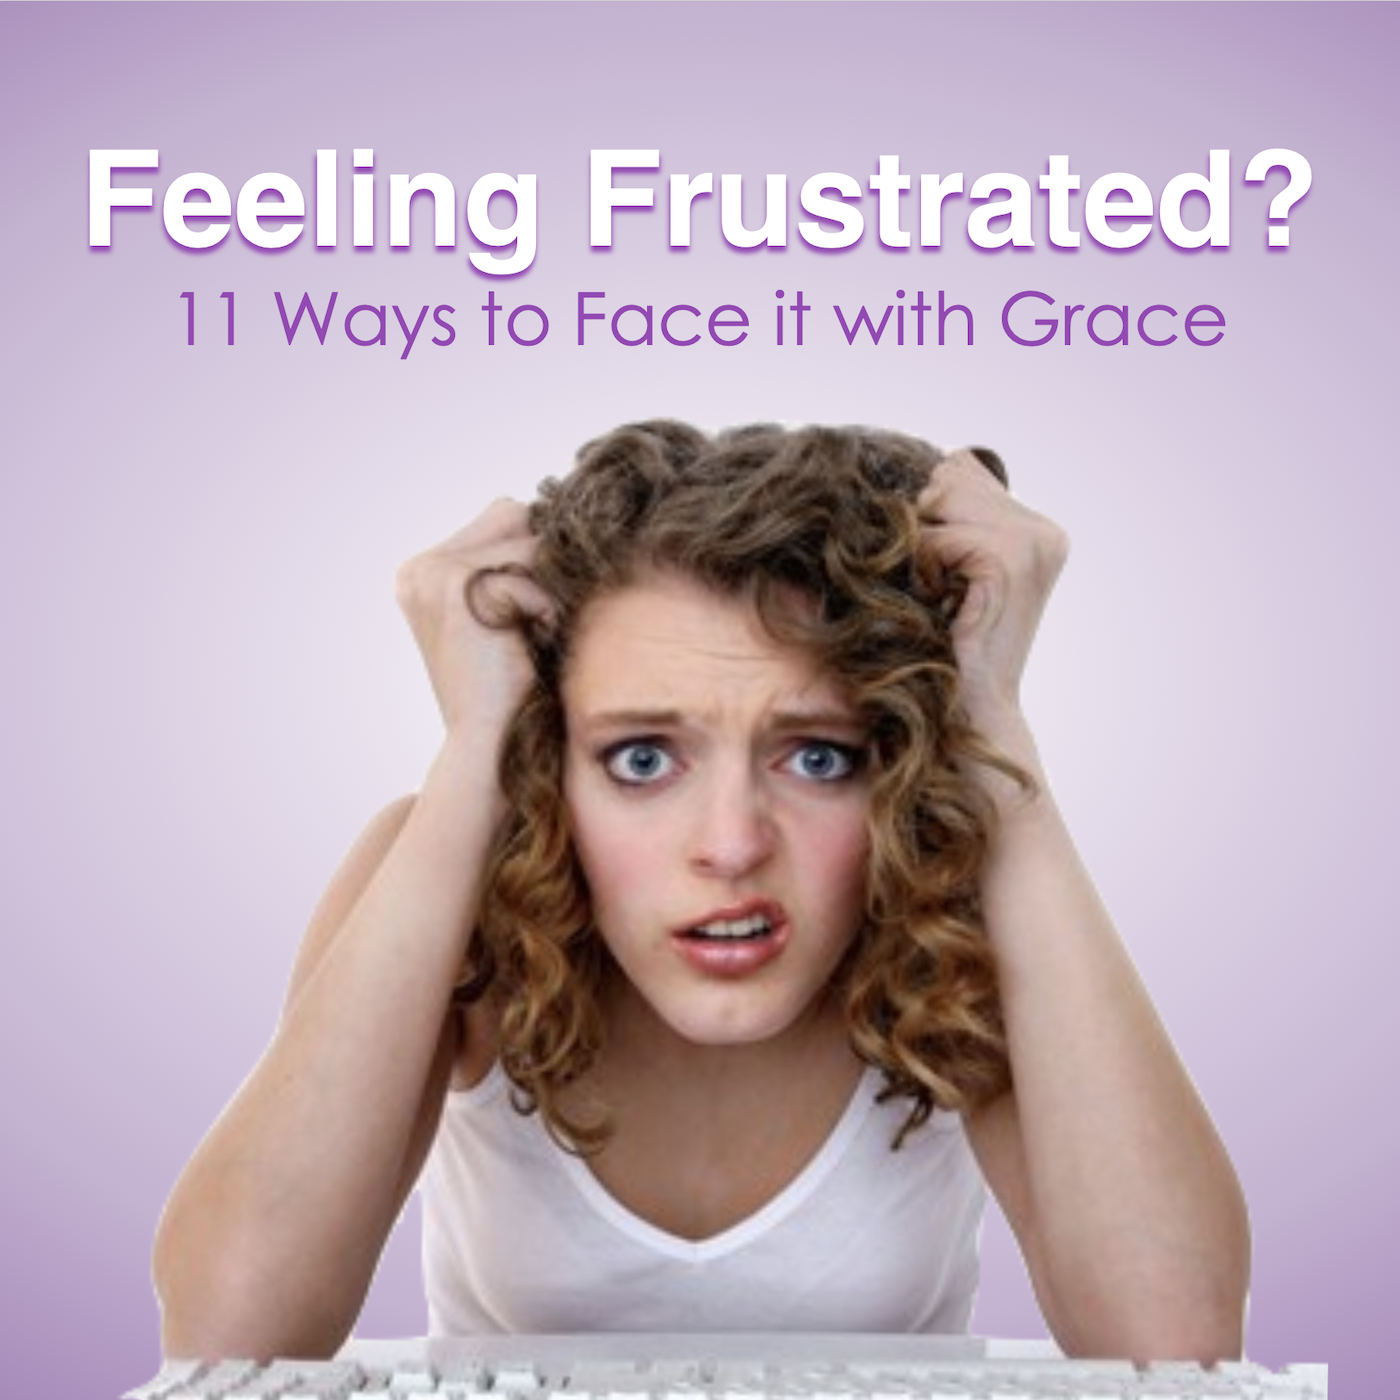 11 Tips for Facing Frustration